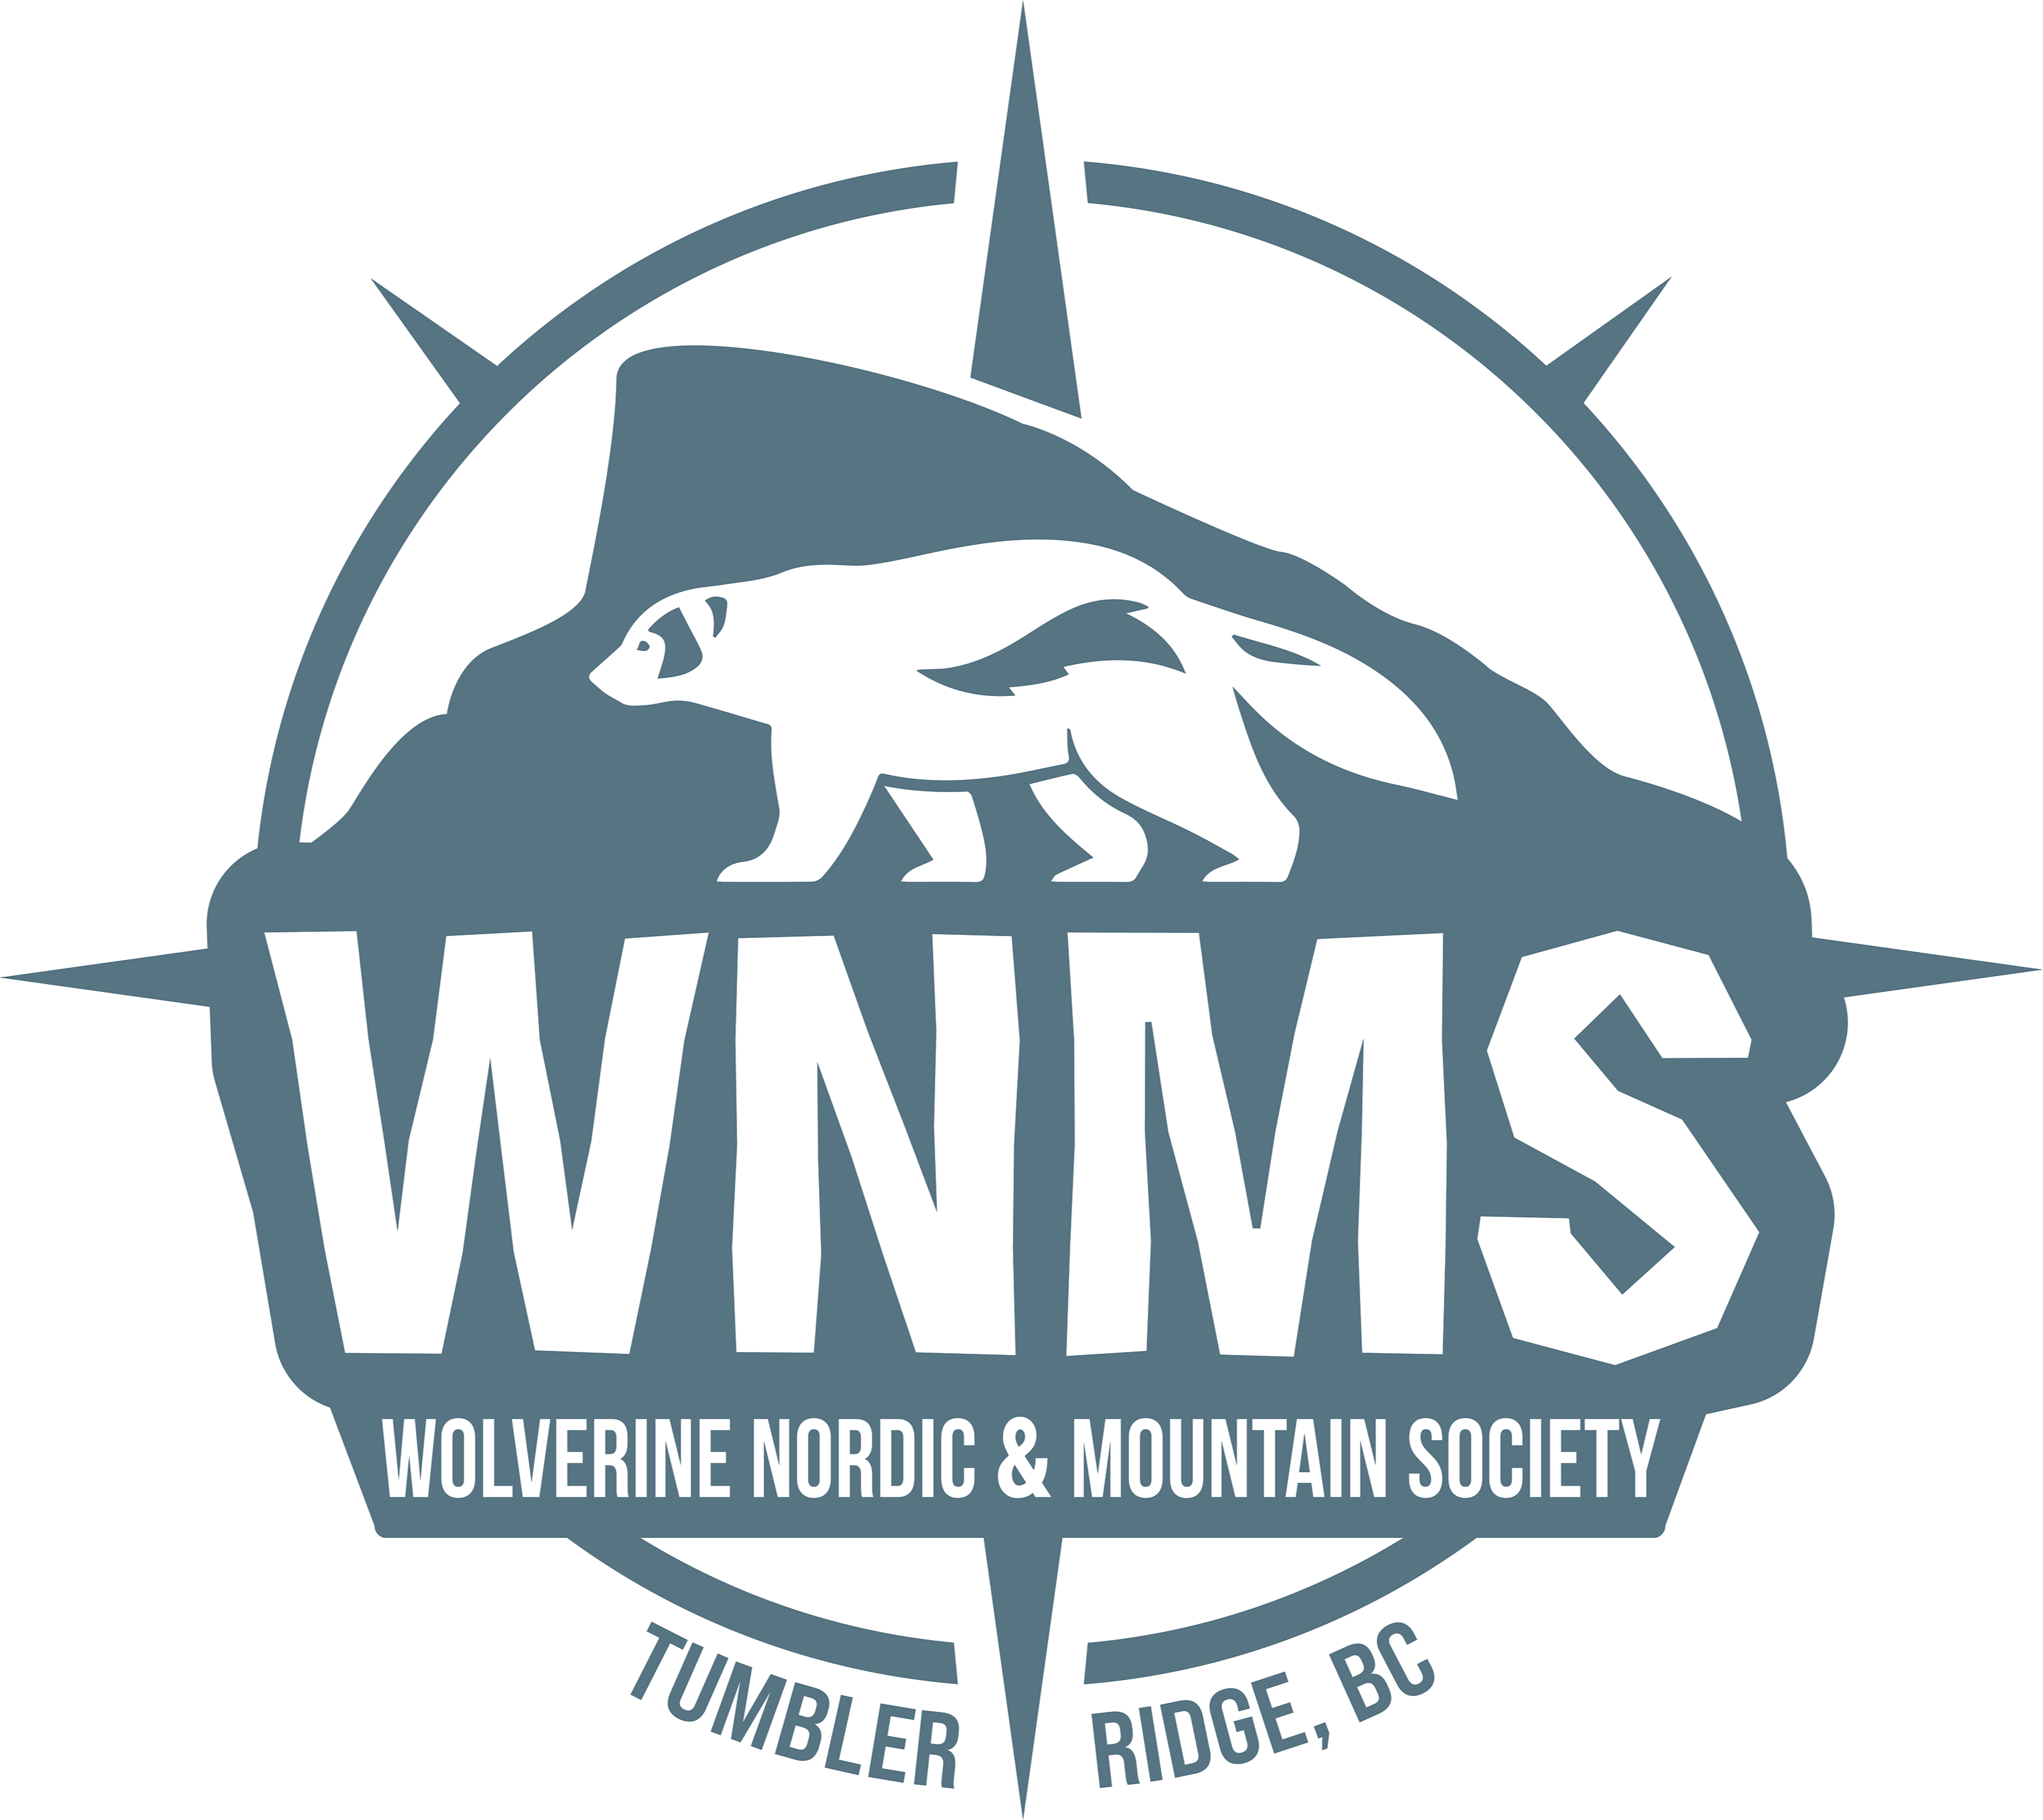 Wolverine Nordic & Mountain Society logo